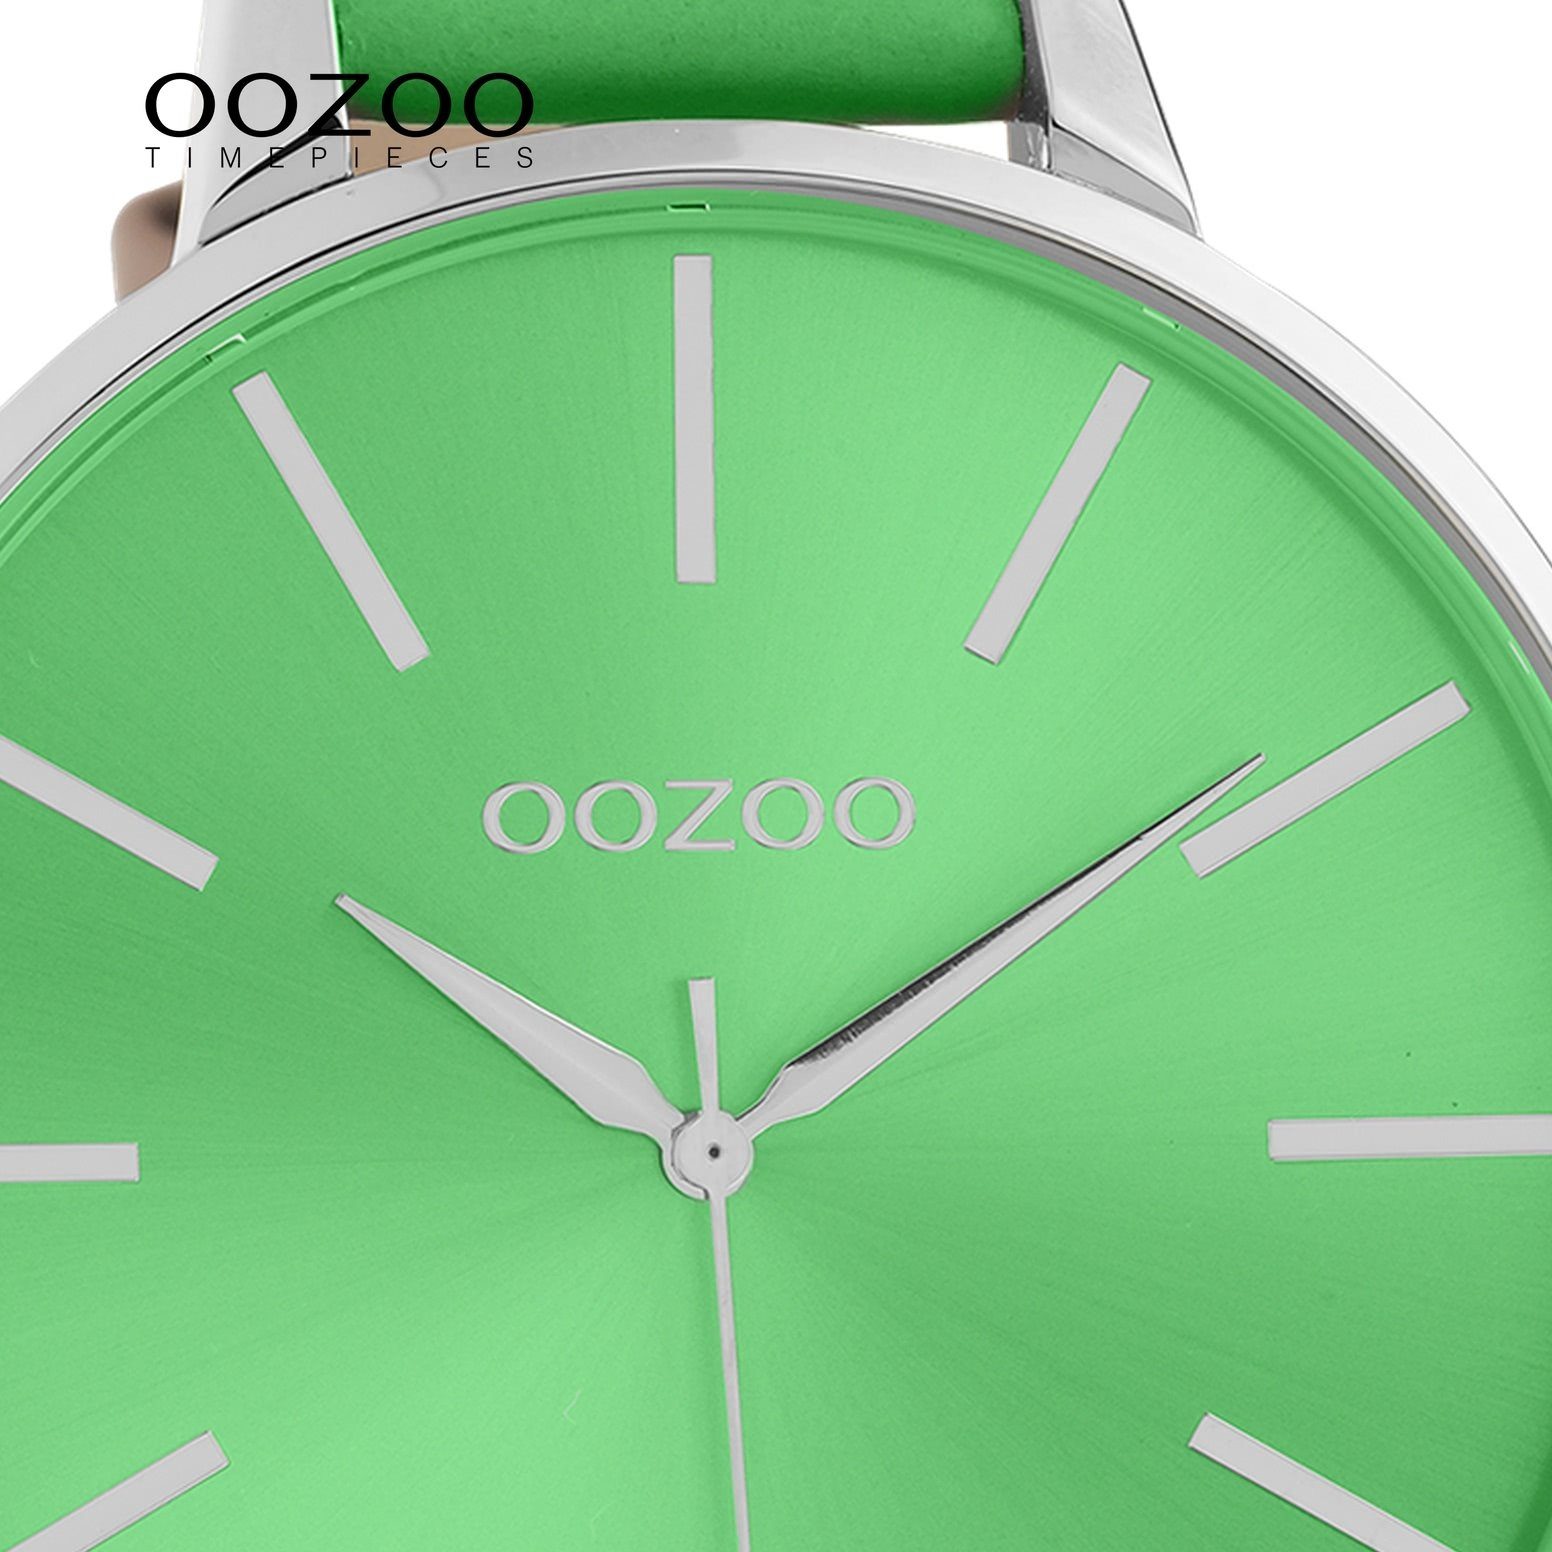 Timepieces, Oozoo 48mm) extra (ca. Armbanduhr Quarzuhr Fashion-Style OOZOO groß Lederarmband, rund, Damen Damenuhr